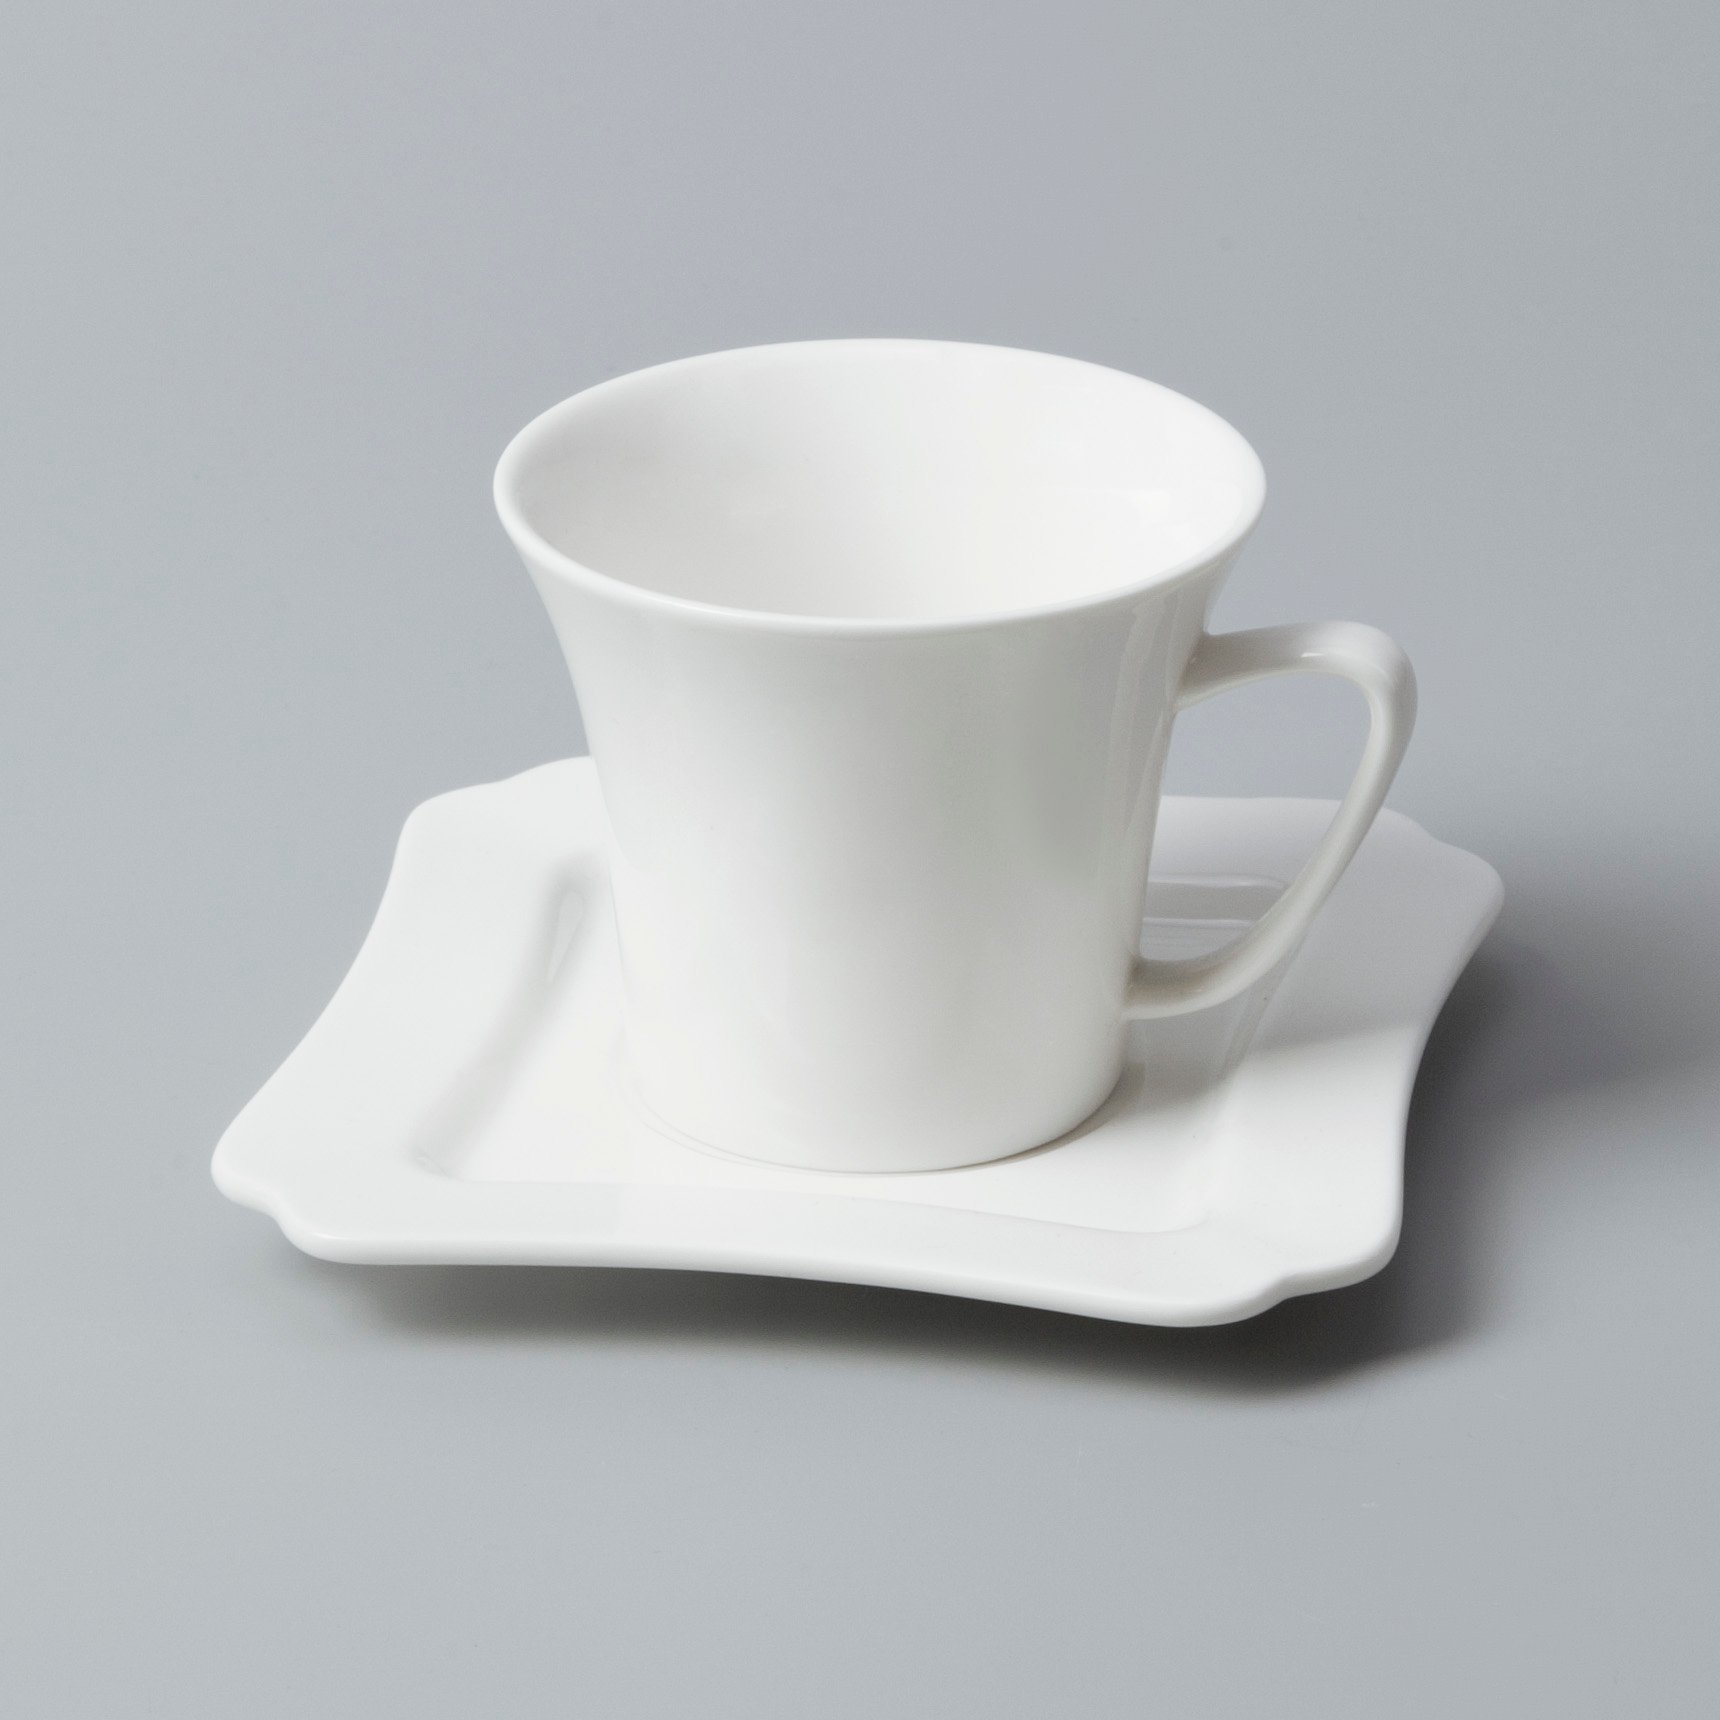 white porcelain tableware meng porcelain two eight ceramics Two Eight Brand